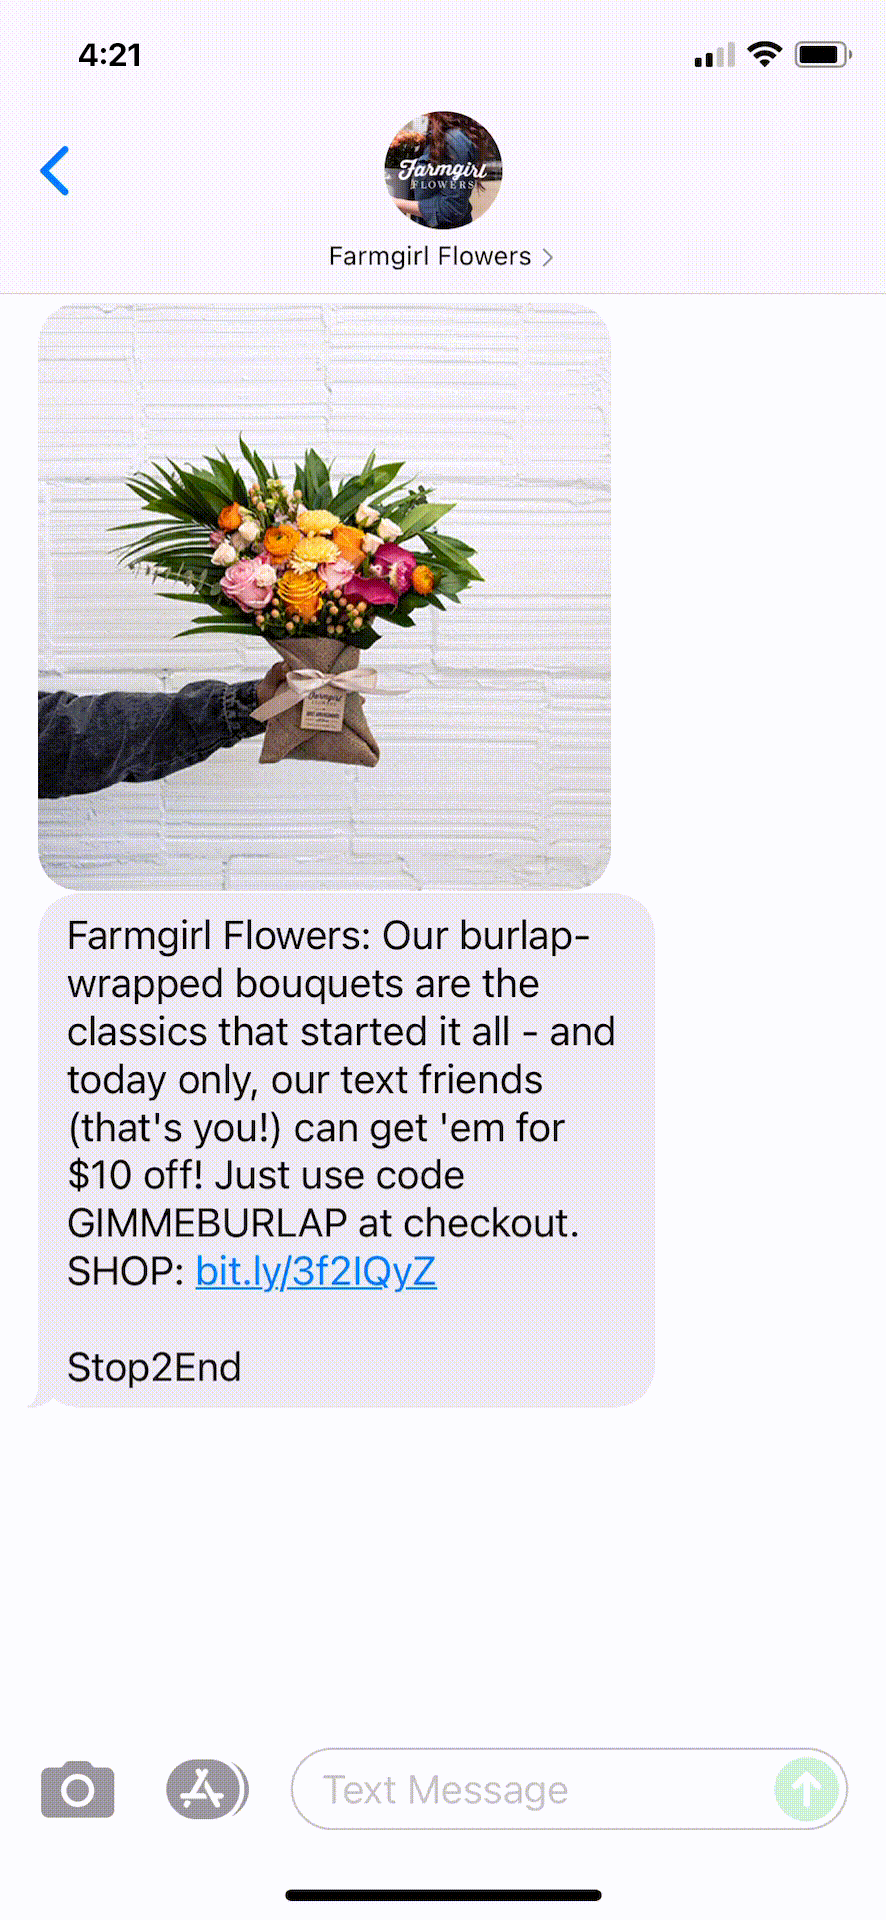 Farmgirl-Flowers-Text-Message-Marketing-Example-07.27.2021